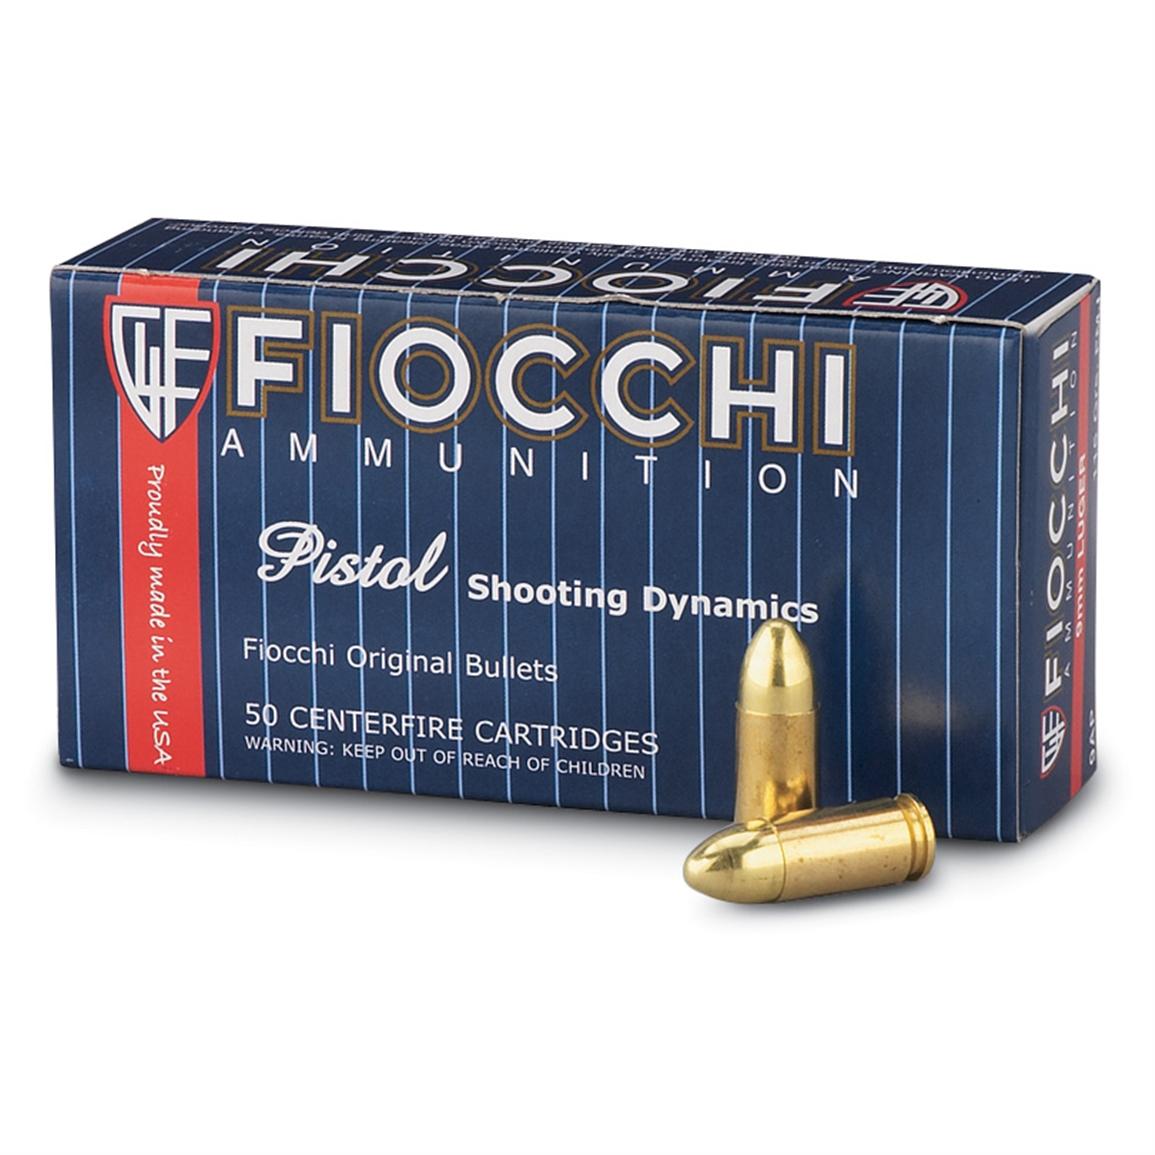 Fiocchi, 9mm Luger, FMJ, 124 Grain, 1,000 Rounds